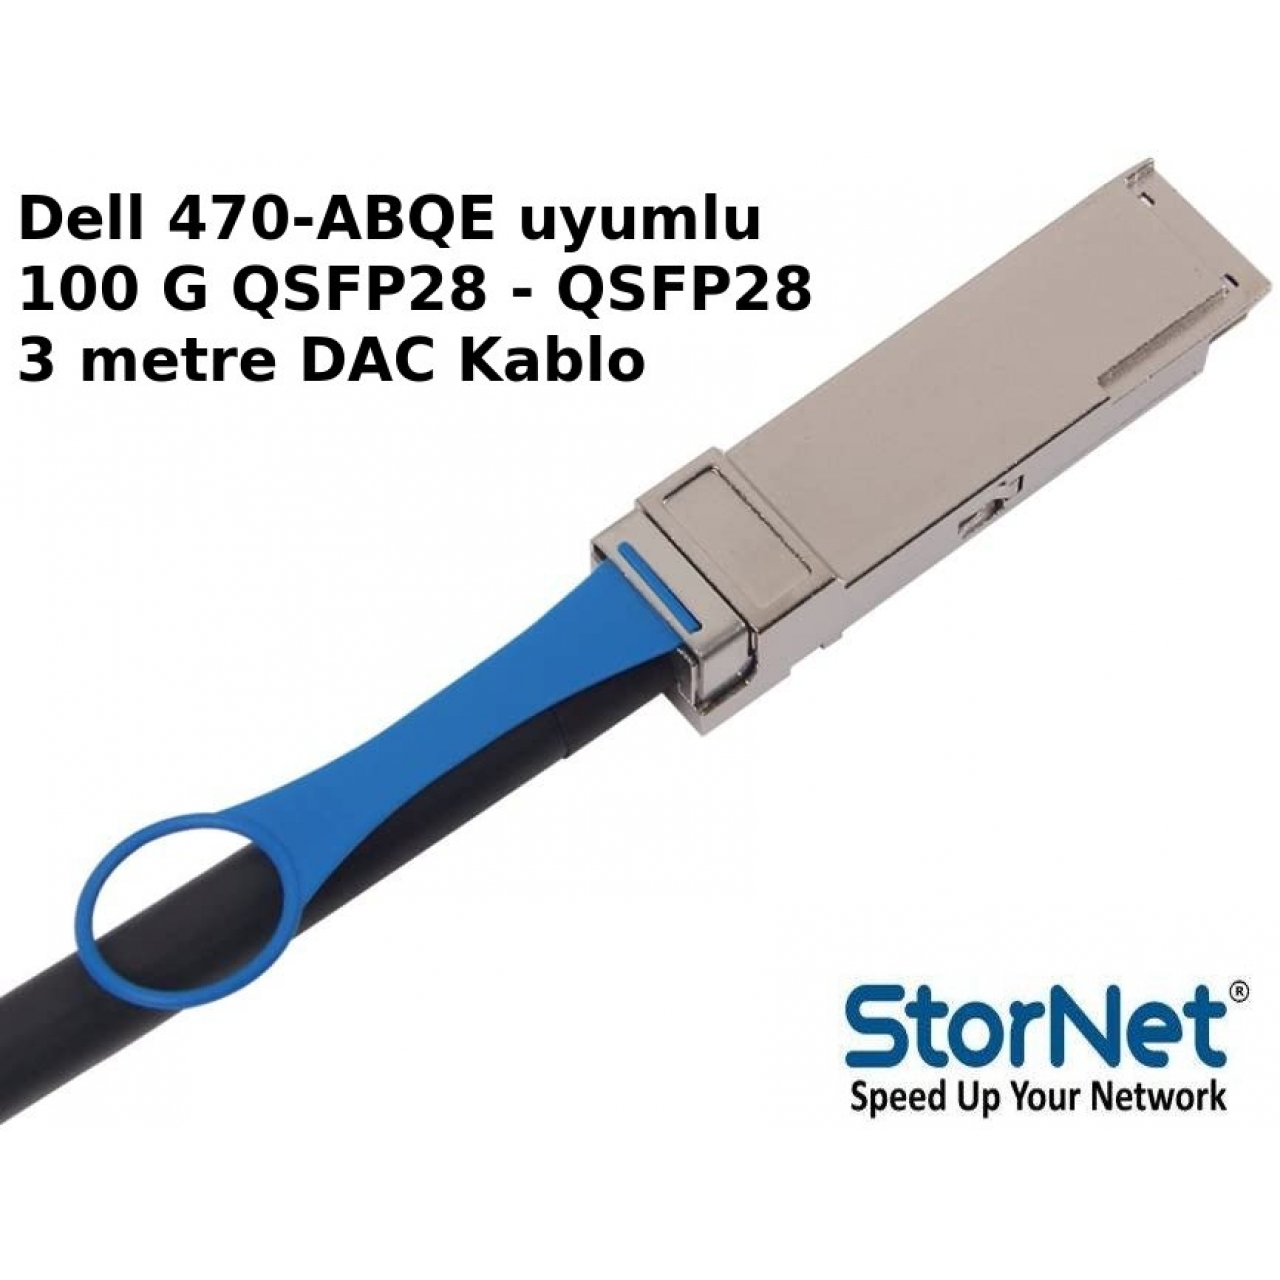 DAC Kablo Dell 470-ABQE 100G QSFP28-QSFP28 3 metre uyumlu